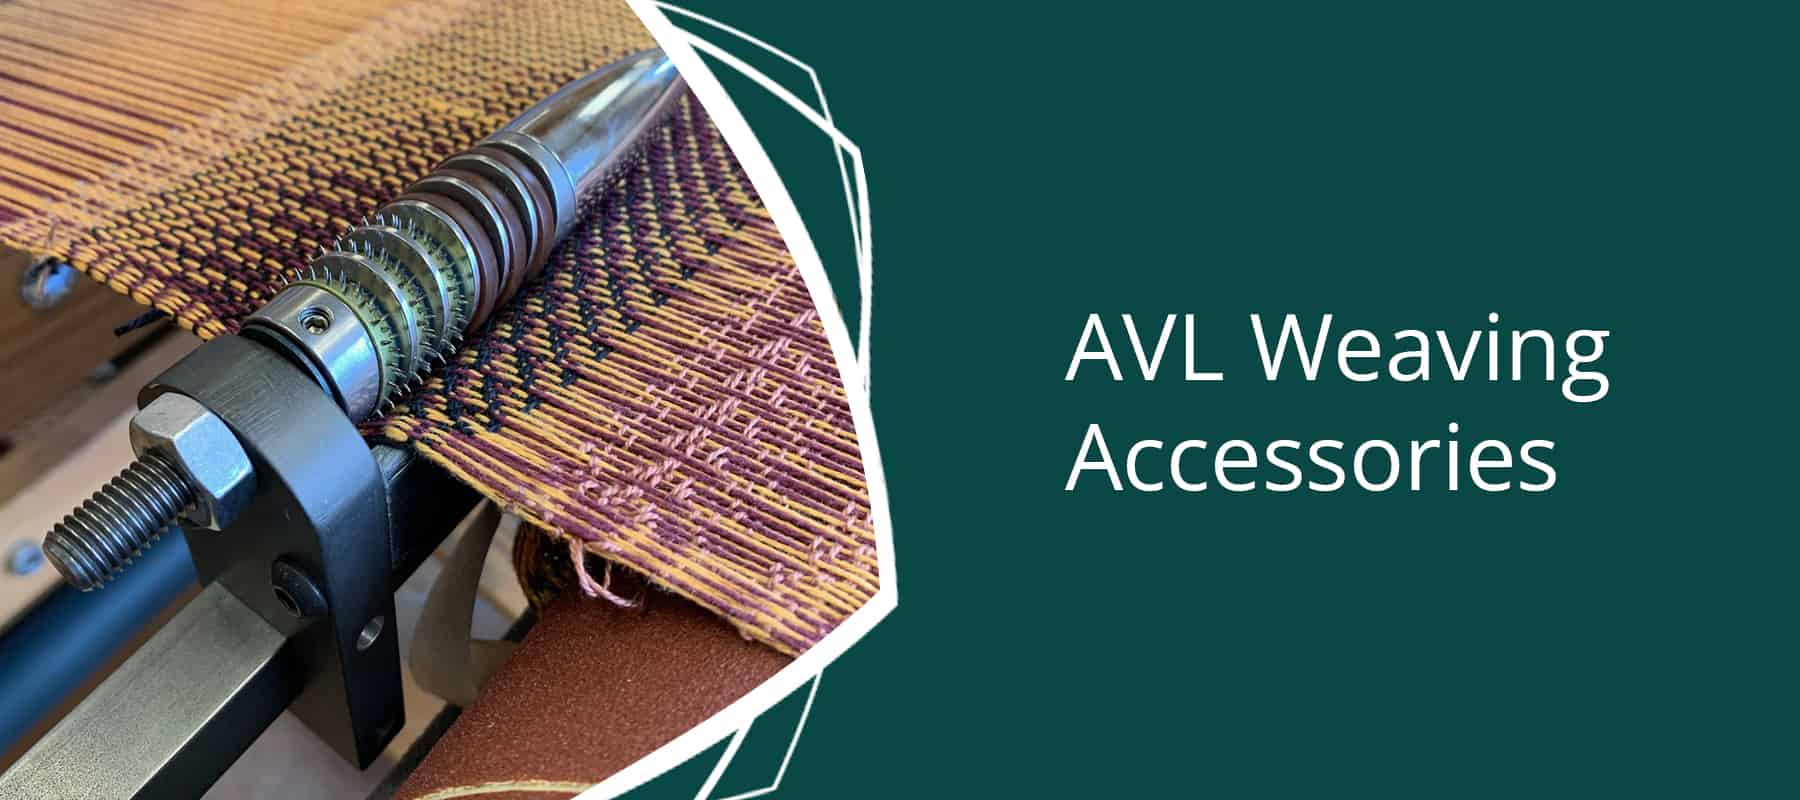 AVL Weaving Accessories - Thread Collective Australia 